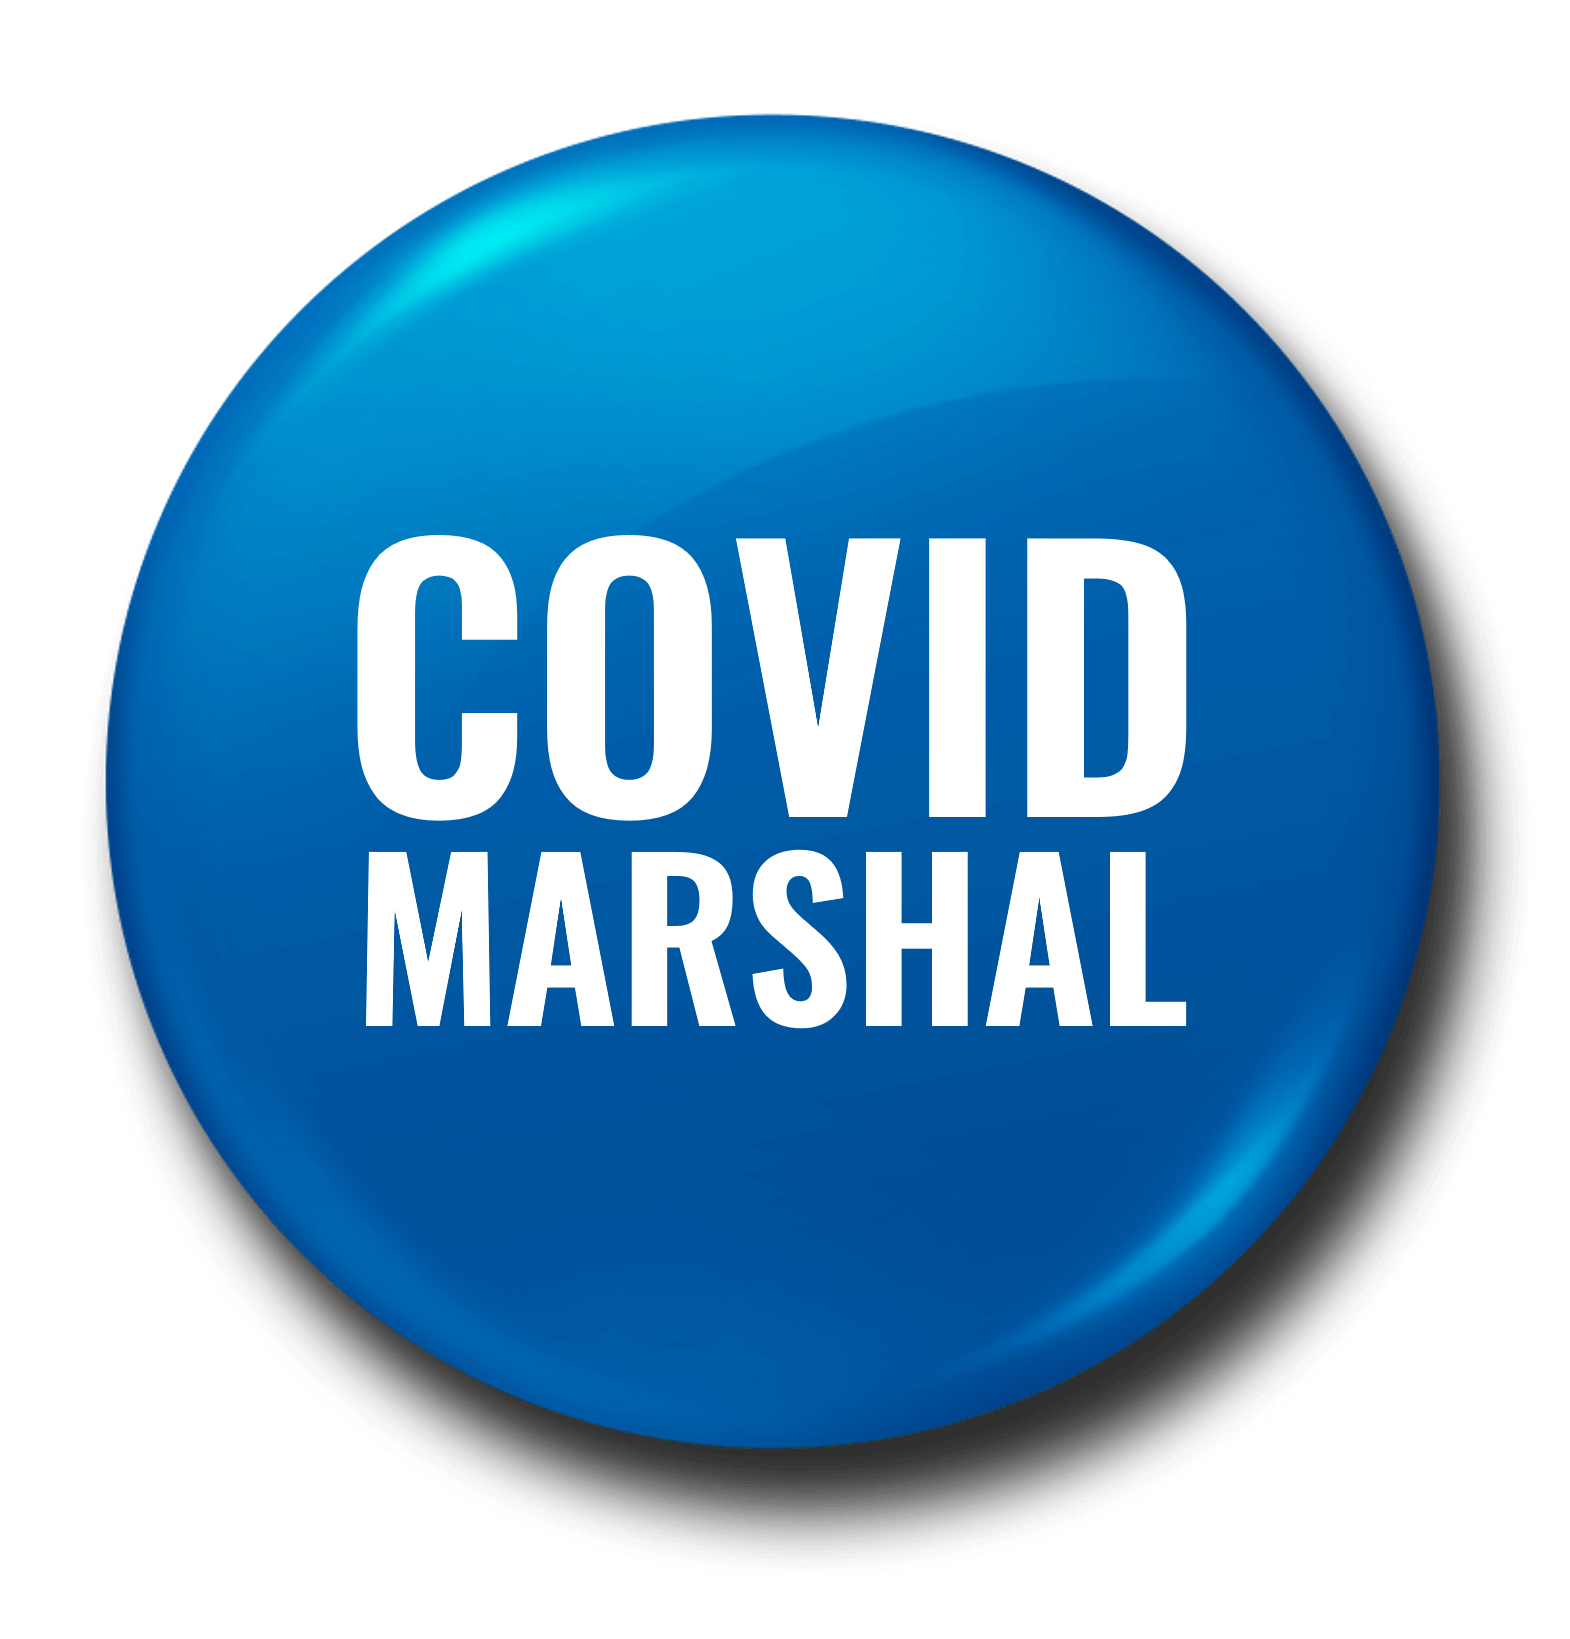 COVID Marshal Badges | Made in Australia